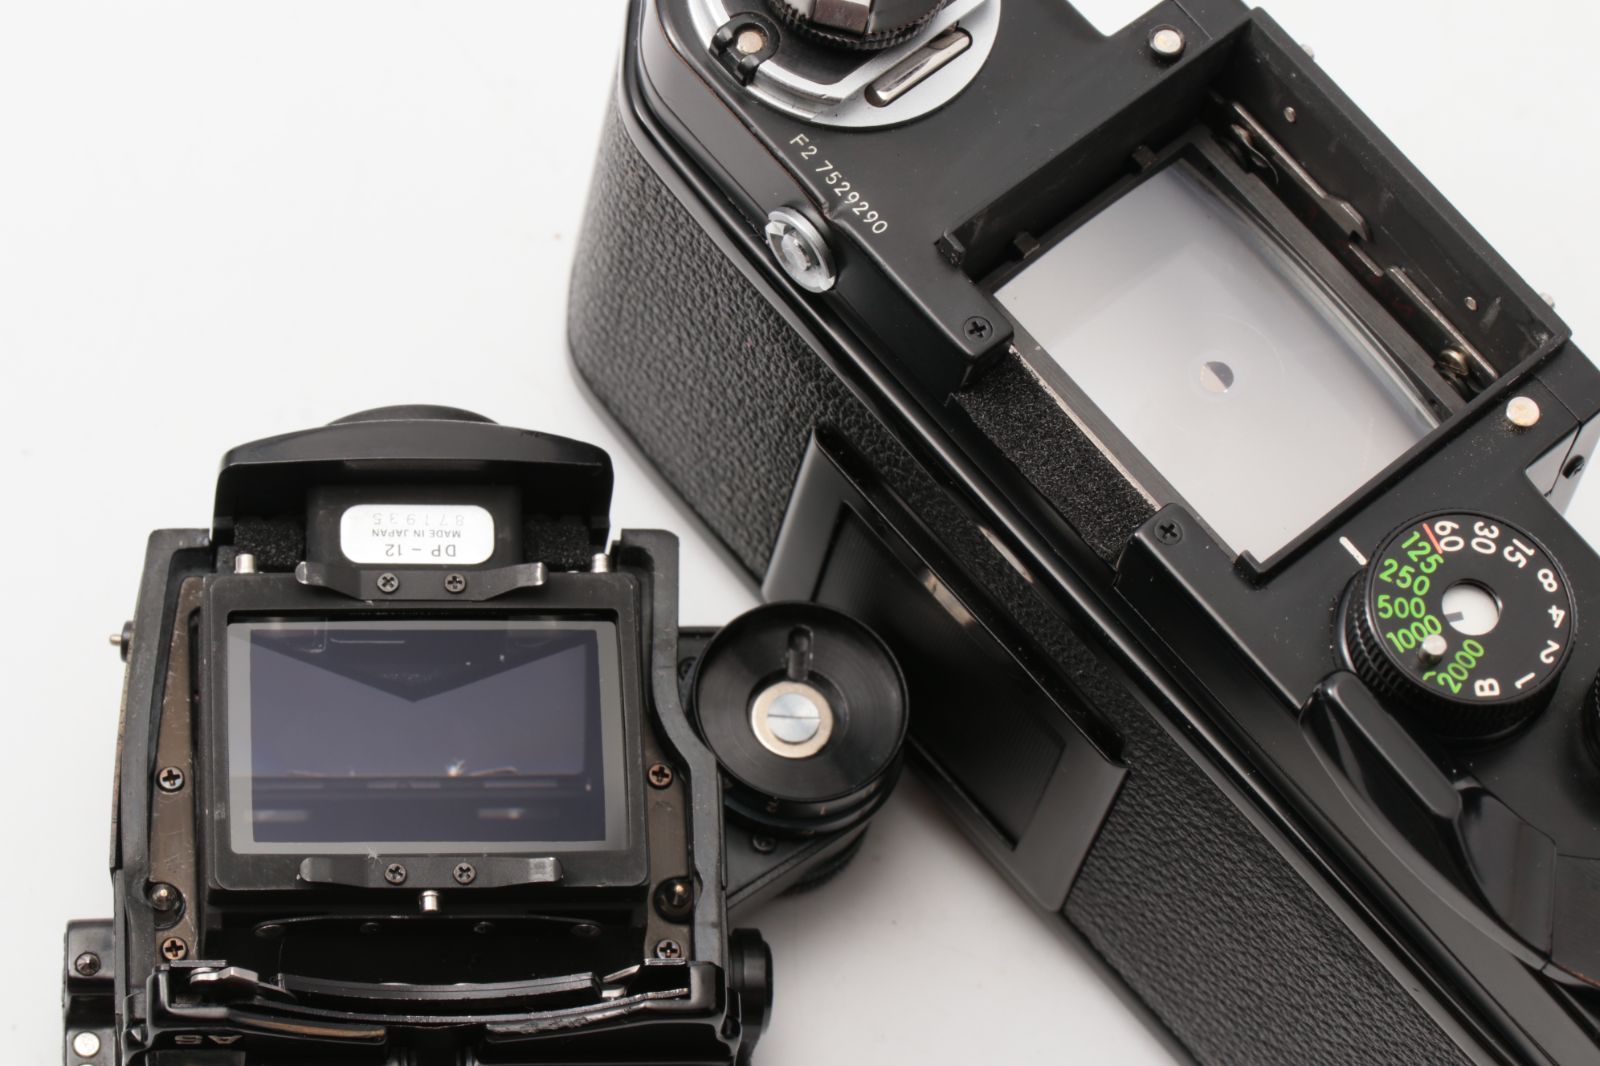 Nikon F2 ASファインダー DP-12 ブラック #766/378/6/2 - Vivid Market